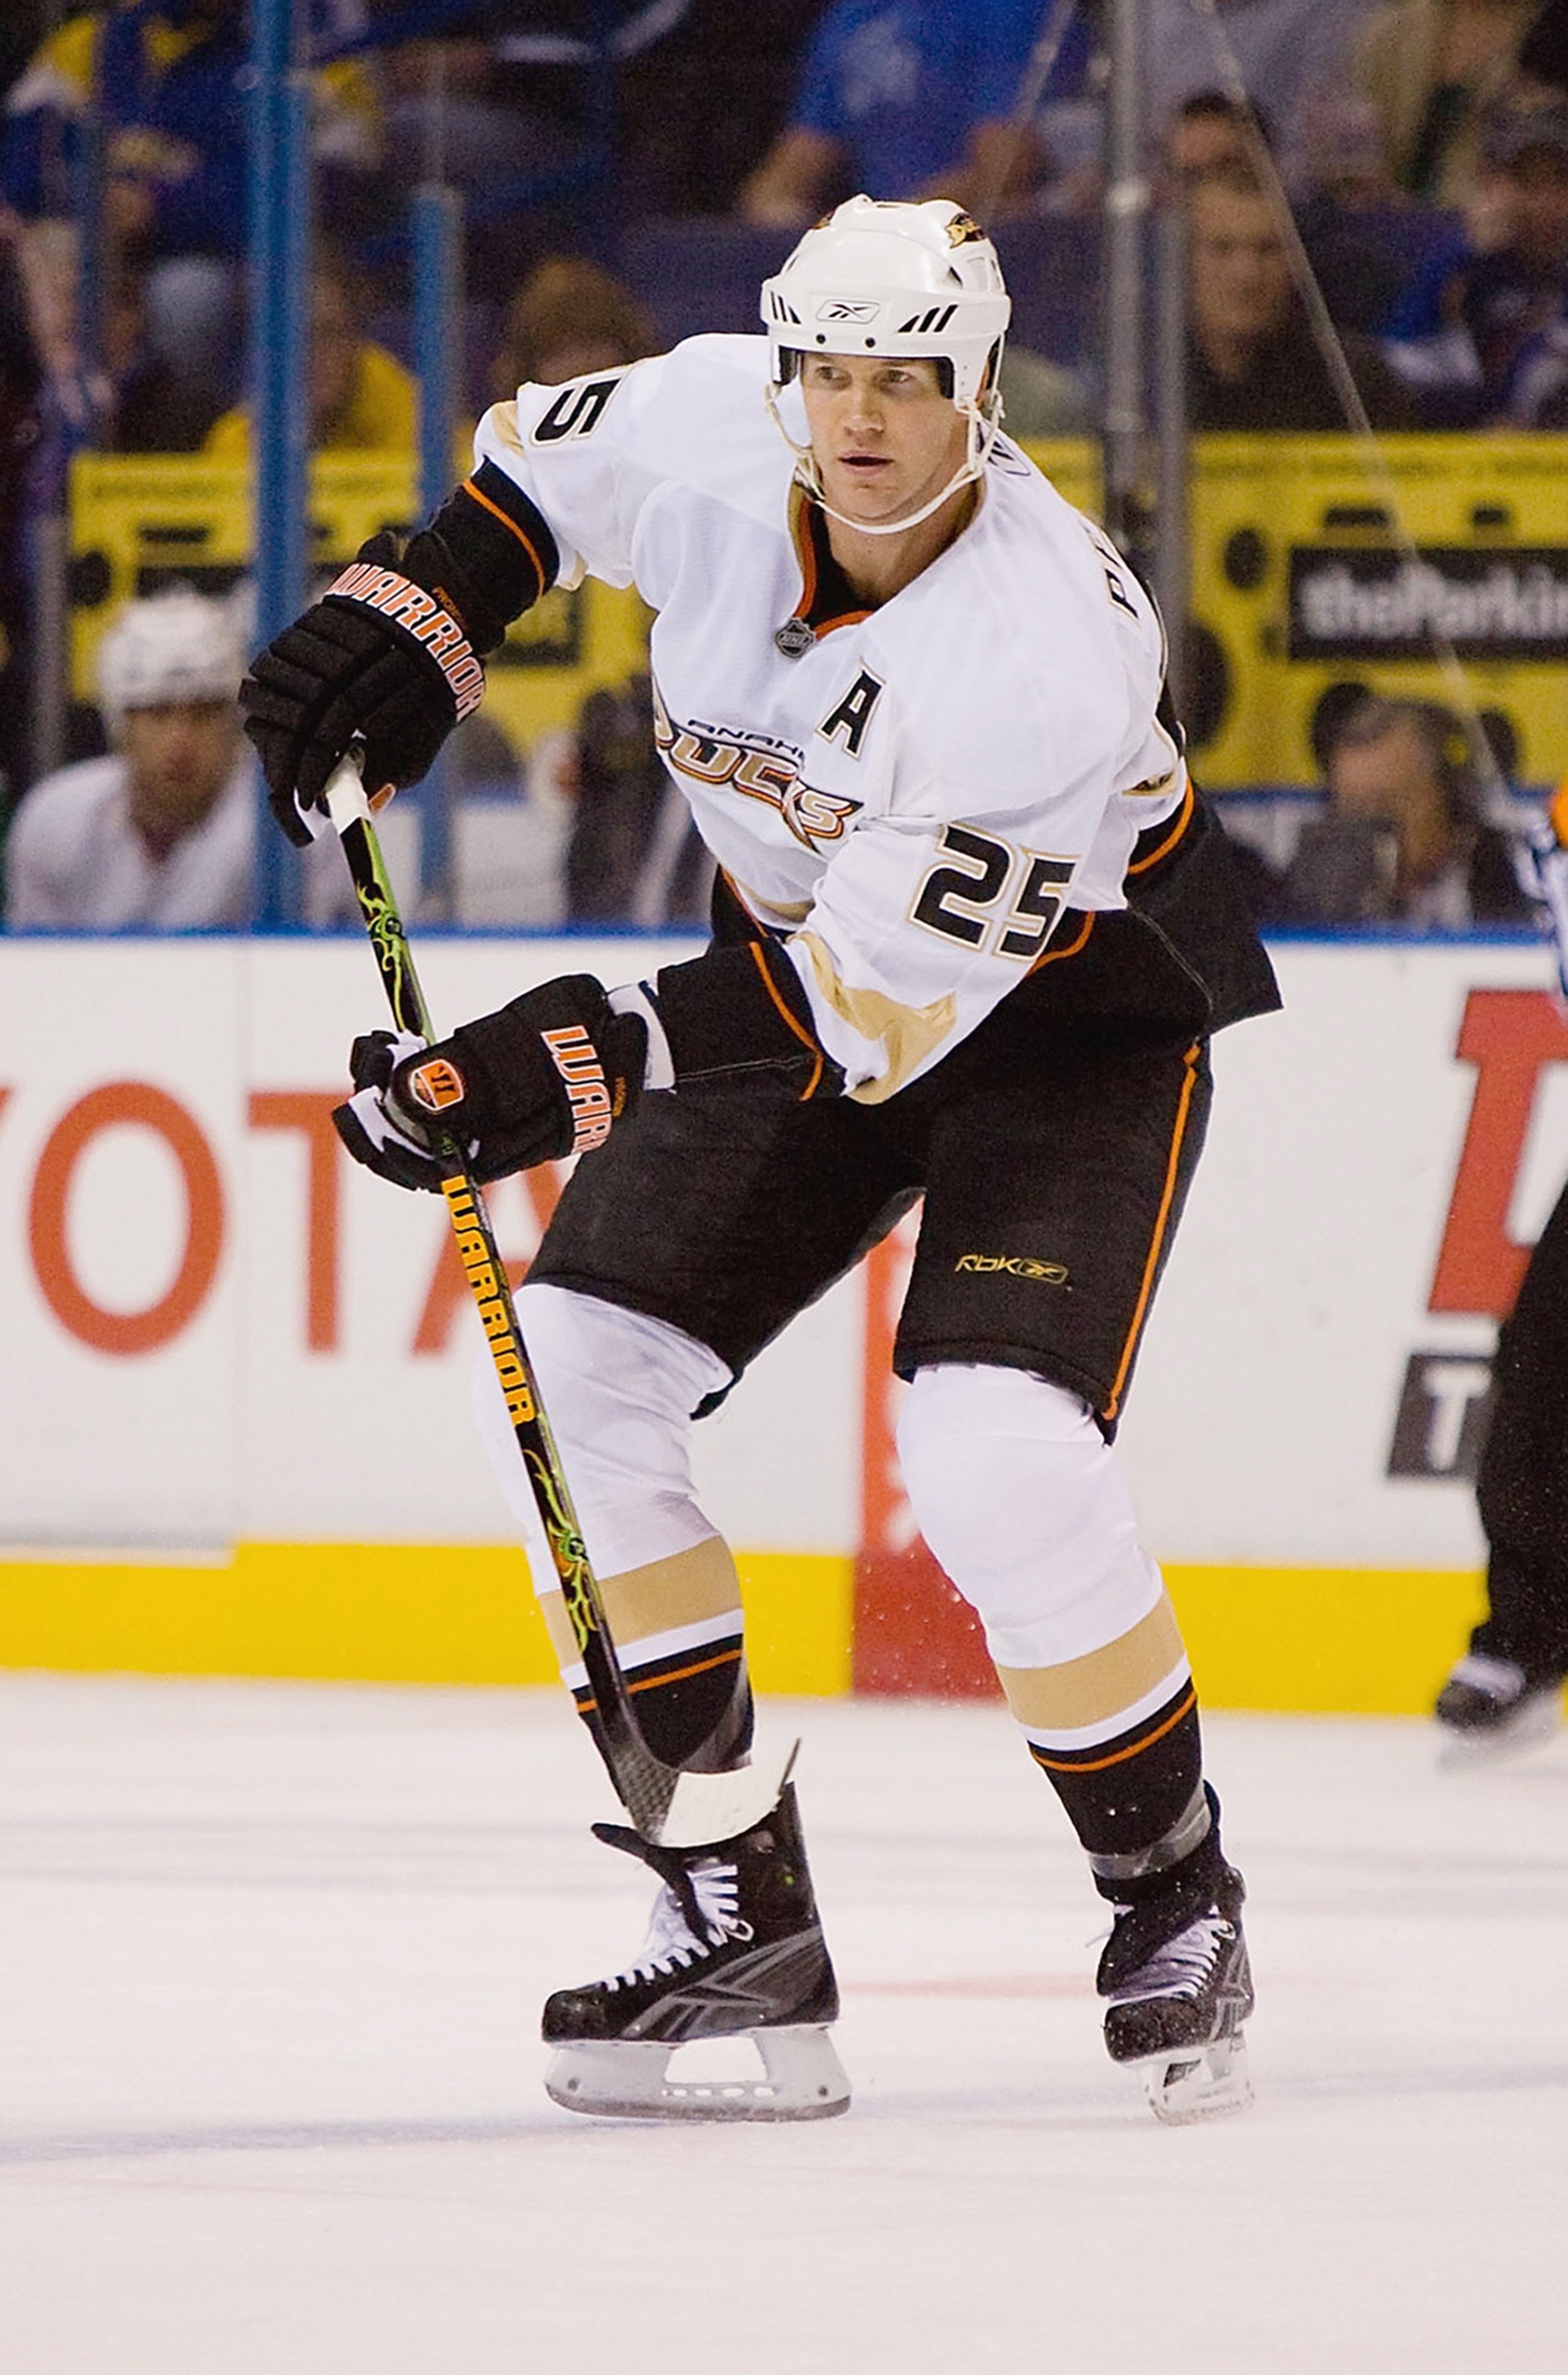 Anaheim Ducks defenseman Chris Pronger skates against the Detroit